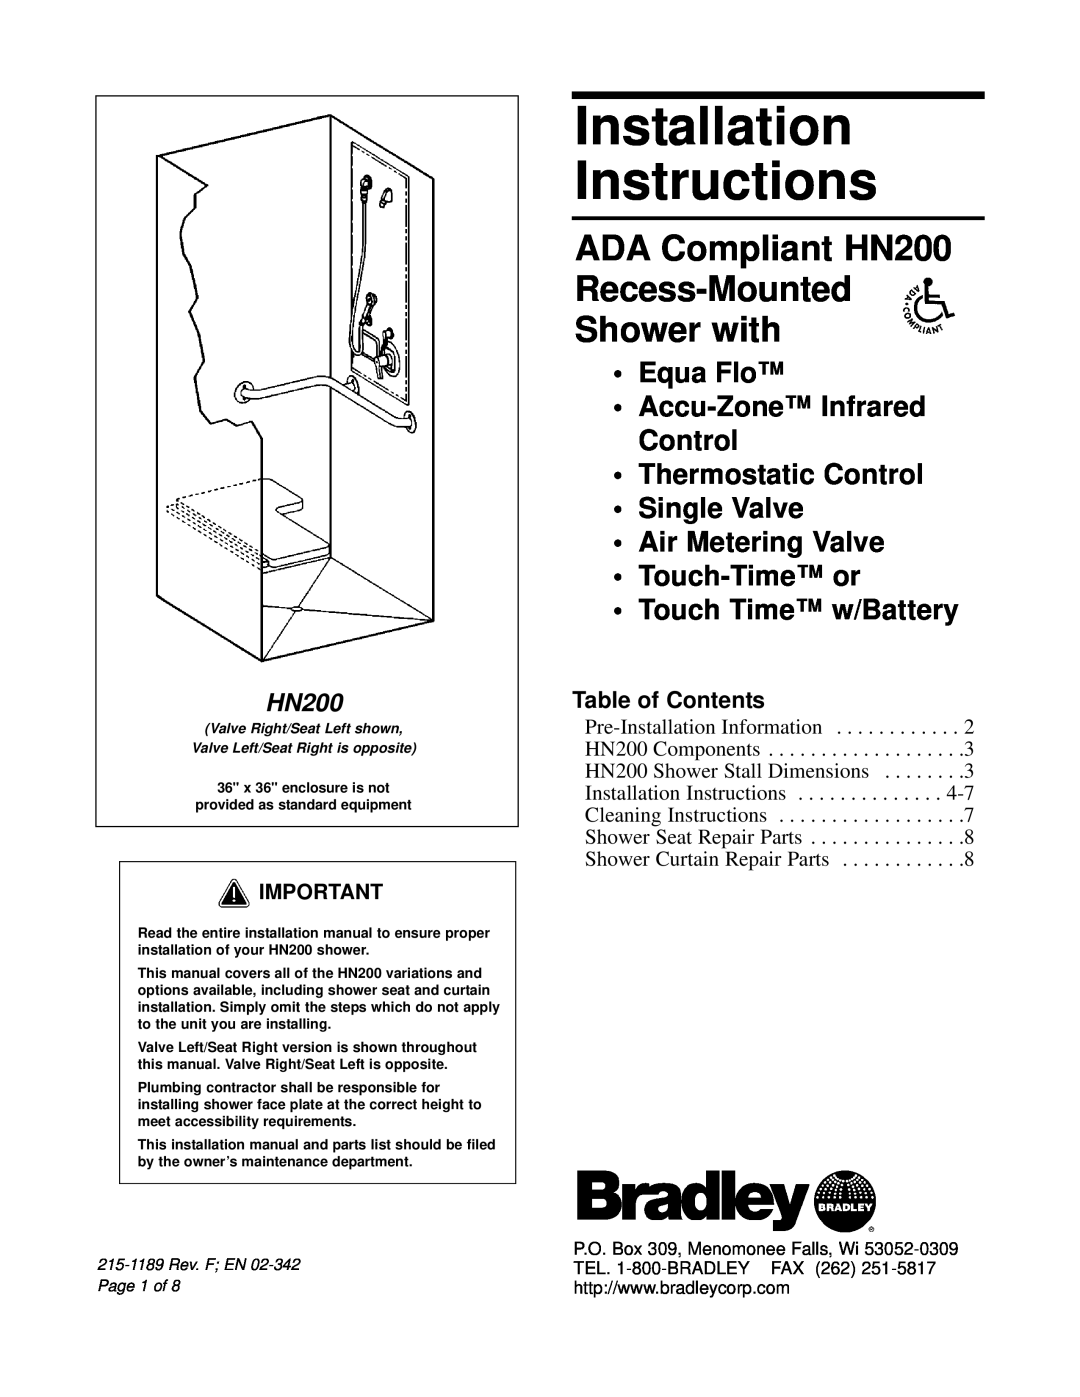 Bradley Smoker HN200 installation instructions Equa Flo Accu-Zone Infrared Control Thermostatic Control Single Valve 